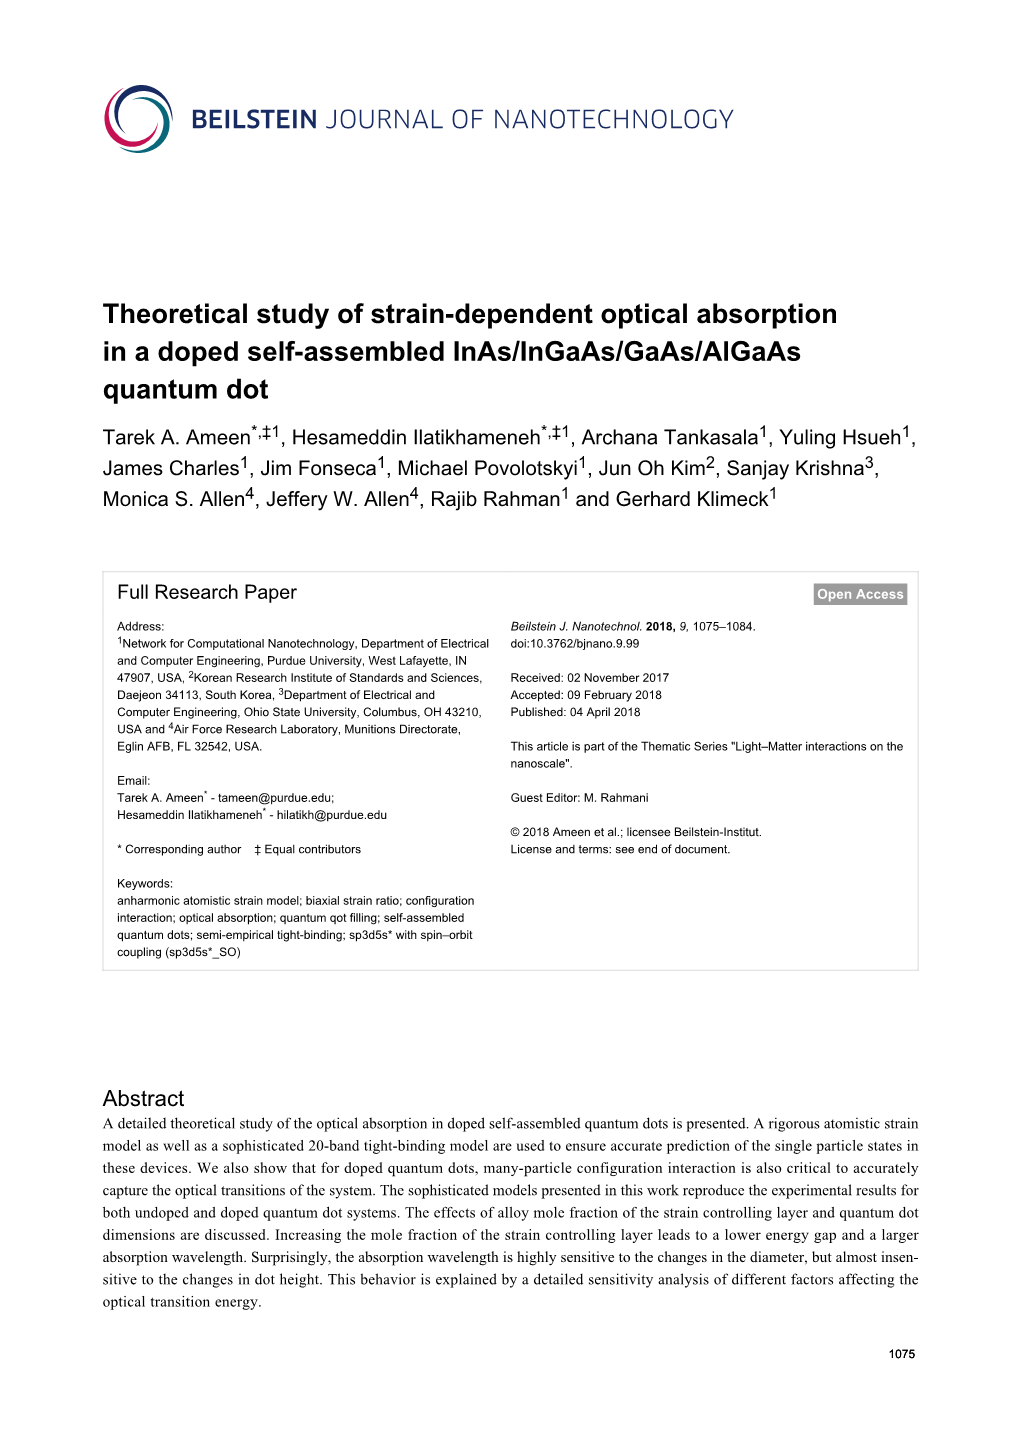 Theoretical Study of Strain-Dependent Optical Absorption in a Doped Self-Assembled Inas/Ingaas/Gaas/Algaas Quantum Dot